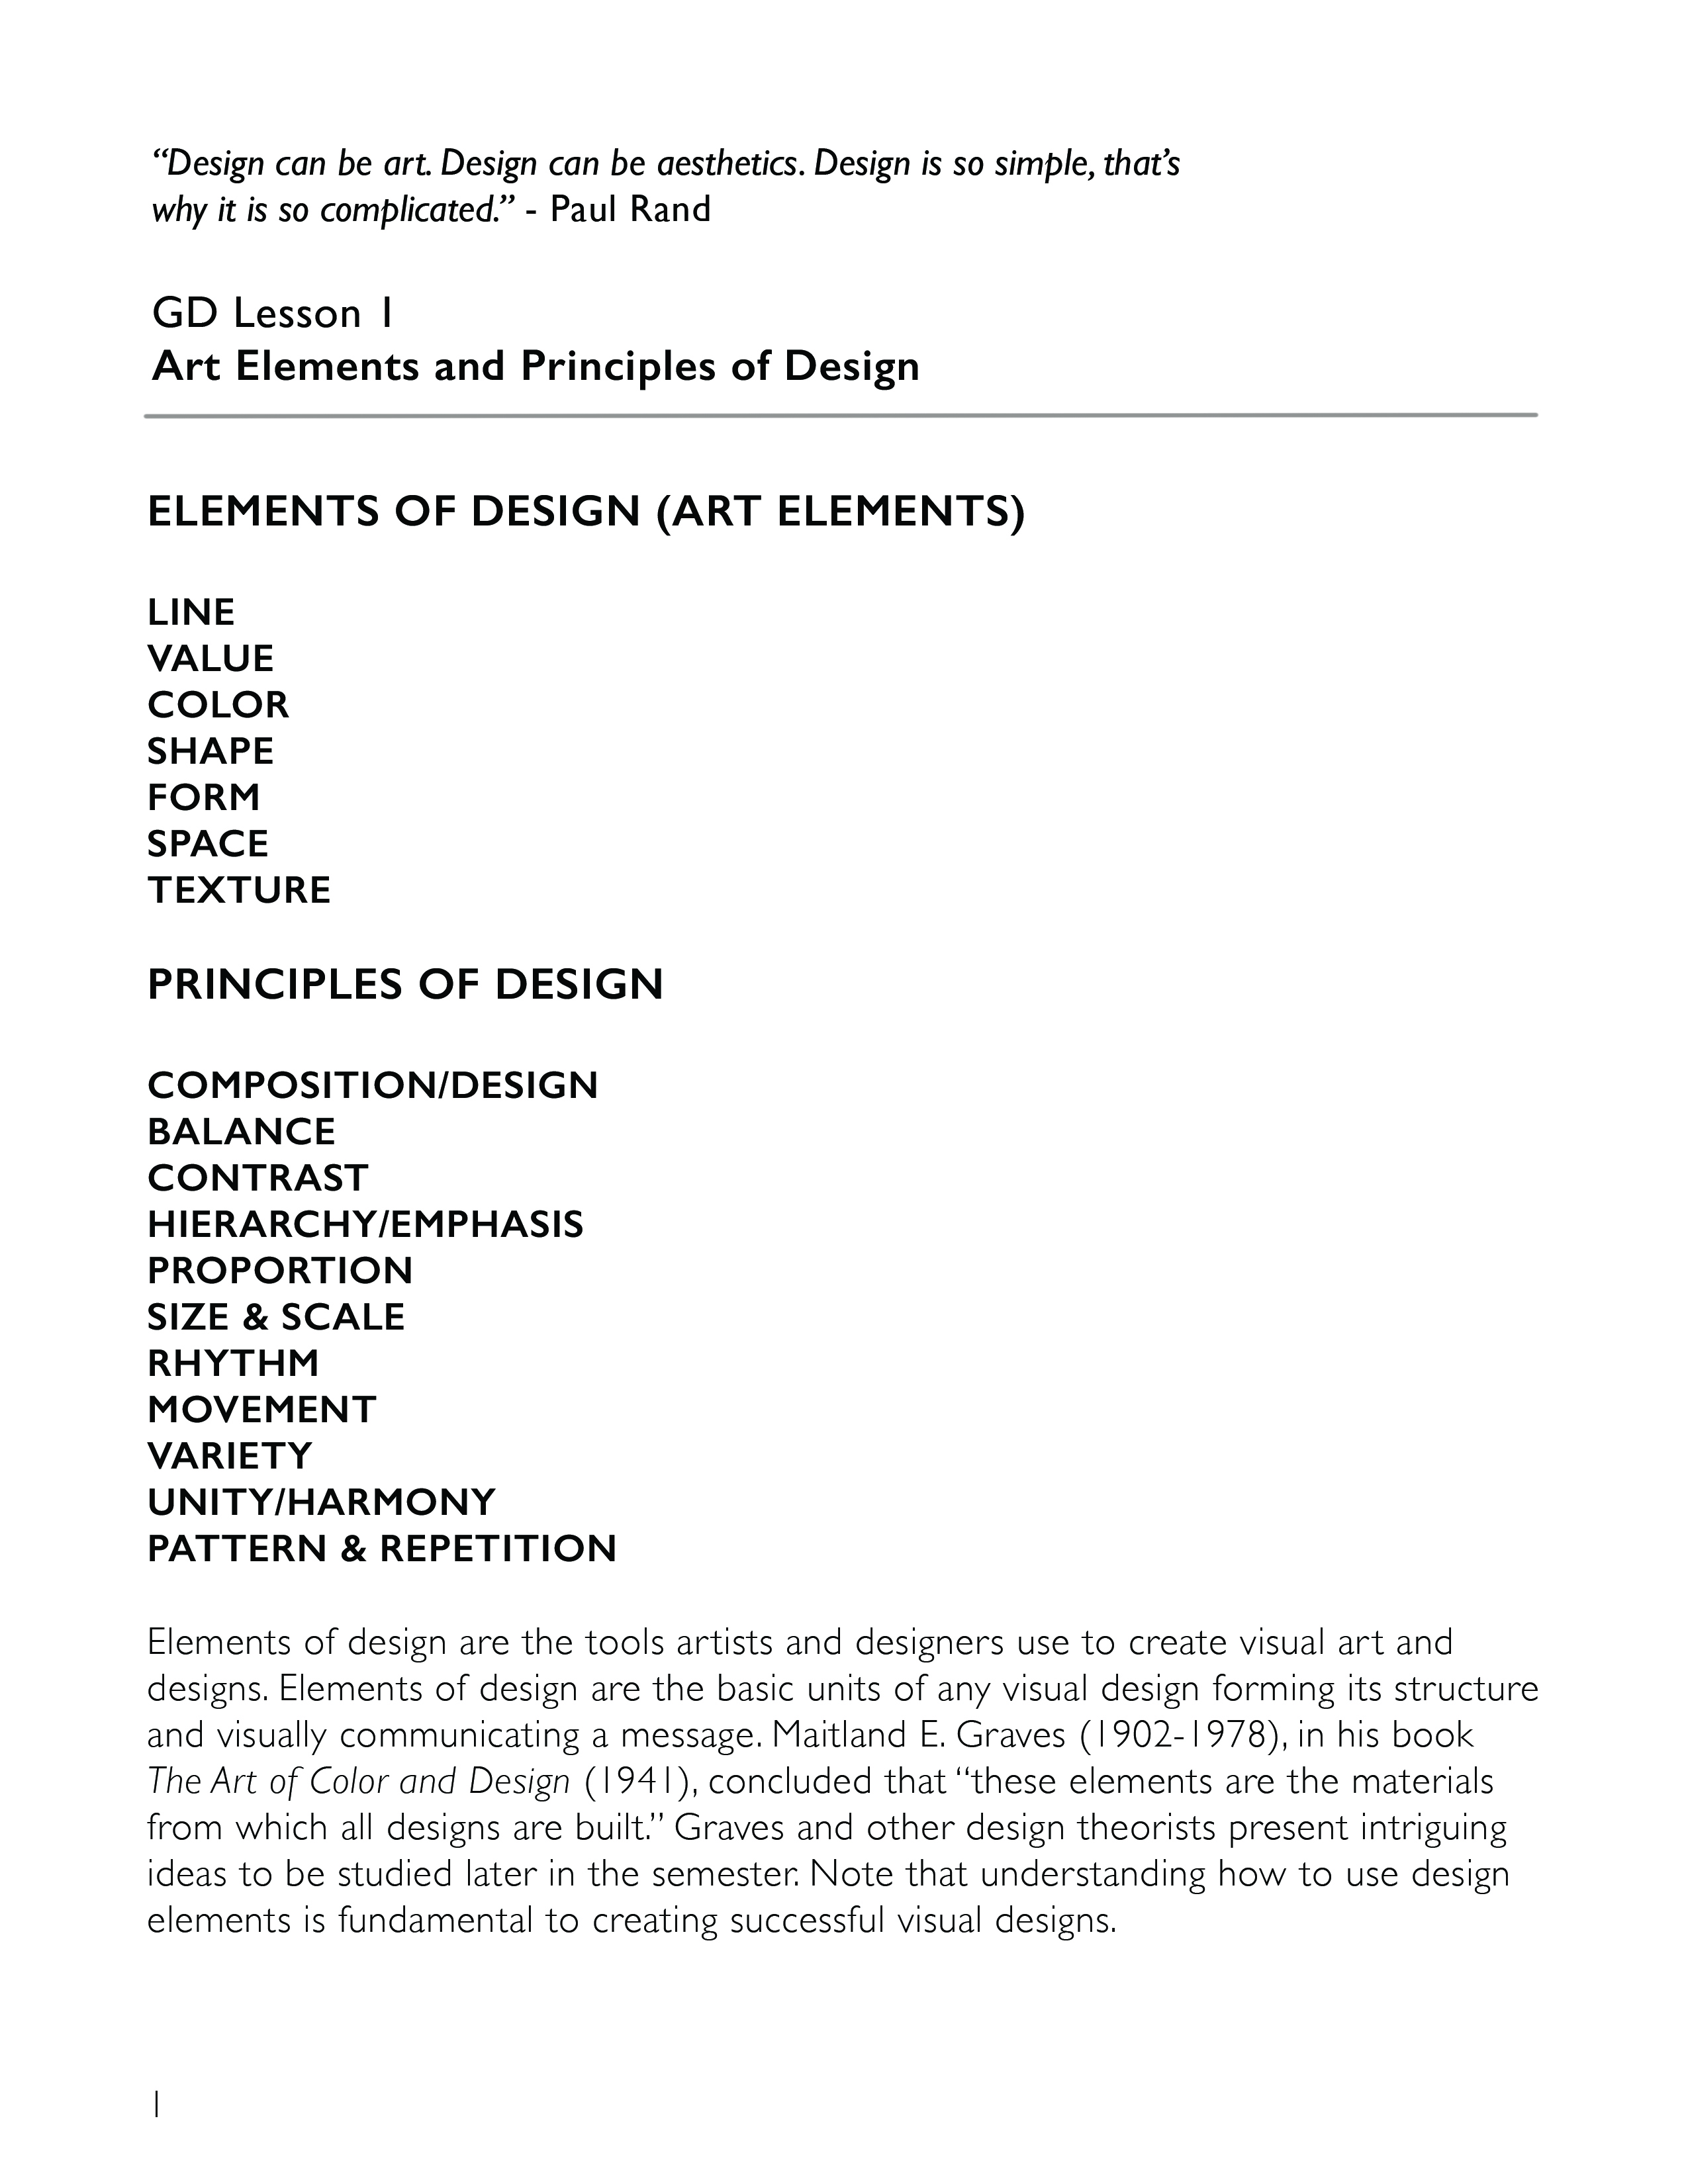 GD Design Lesson 1 copy.jpg